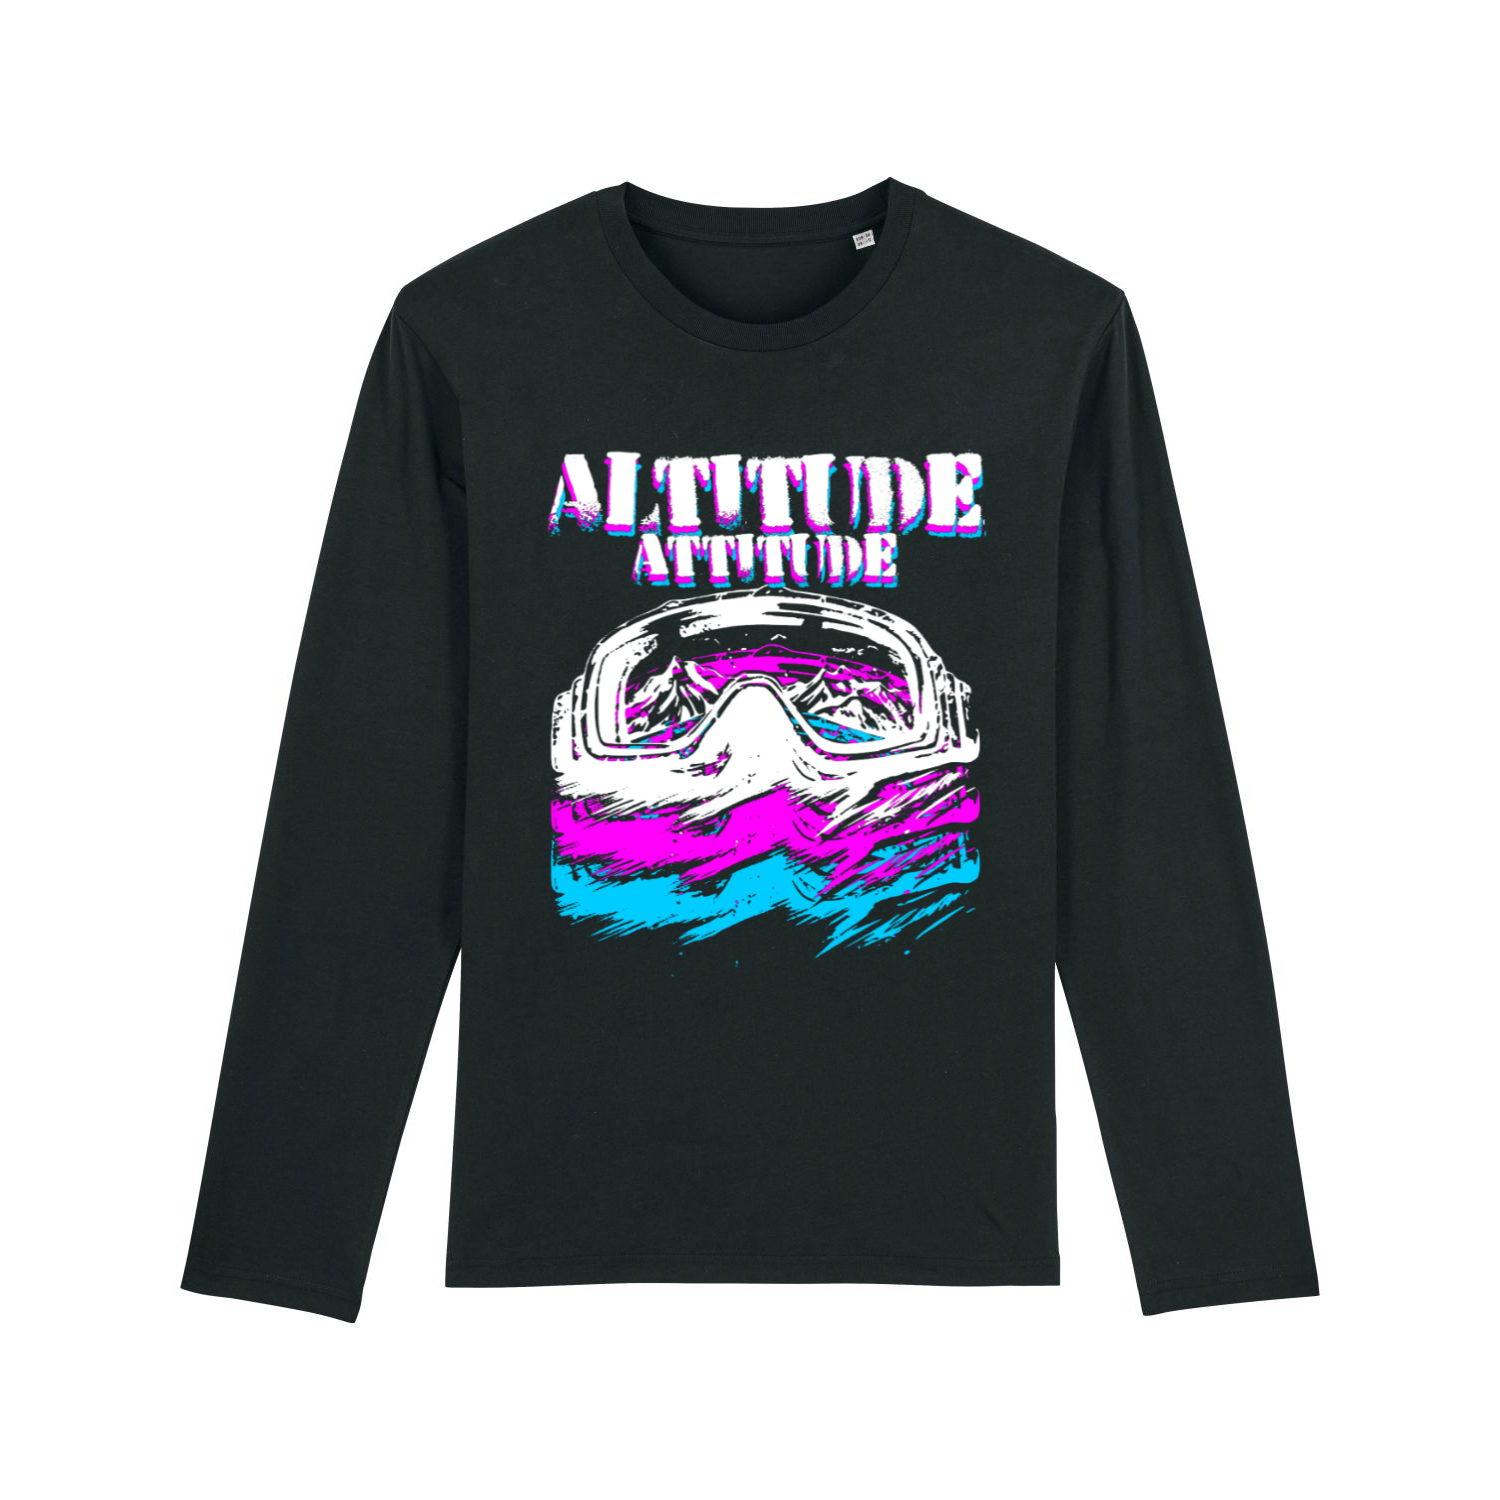 Altitude Attitude - Longsleeve - Summer Sucks